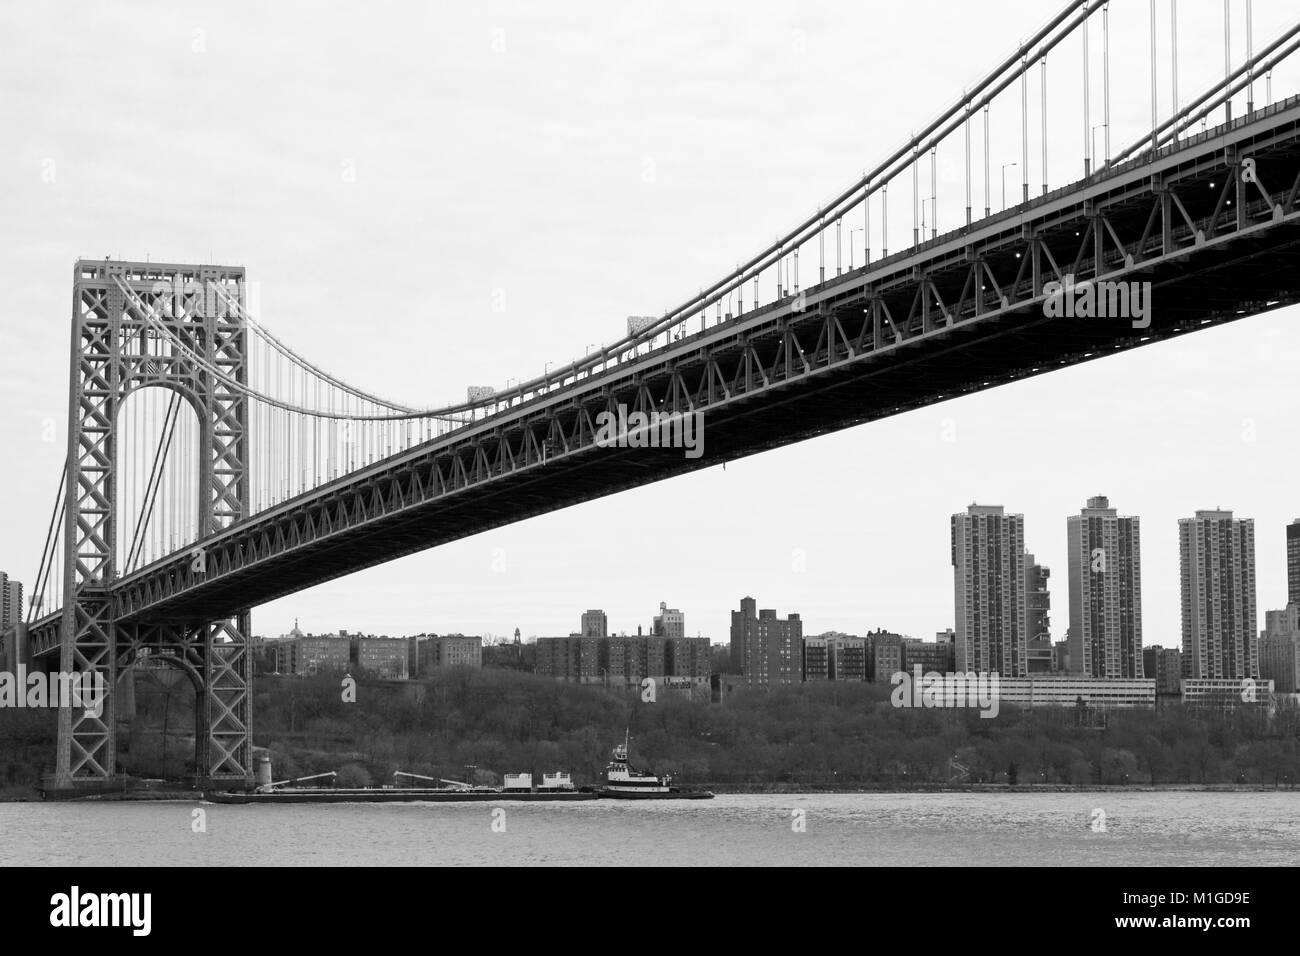 The George Washington Bridge as seen from New Jersey. Stock Photo